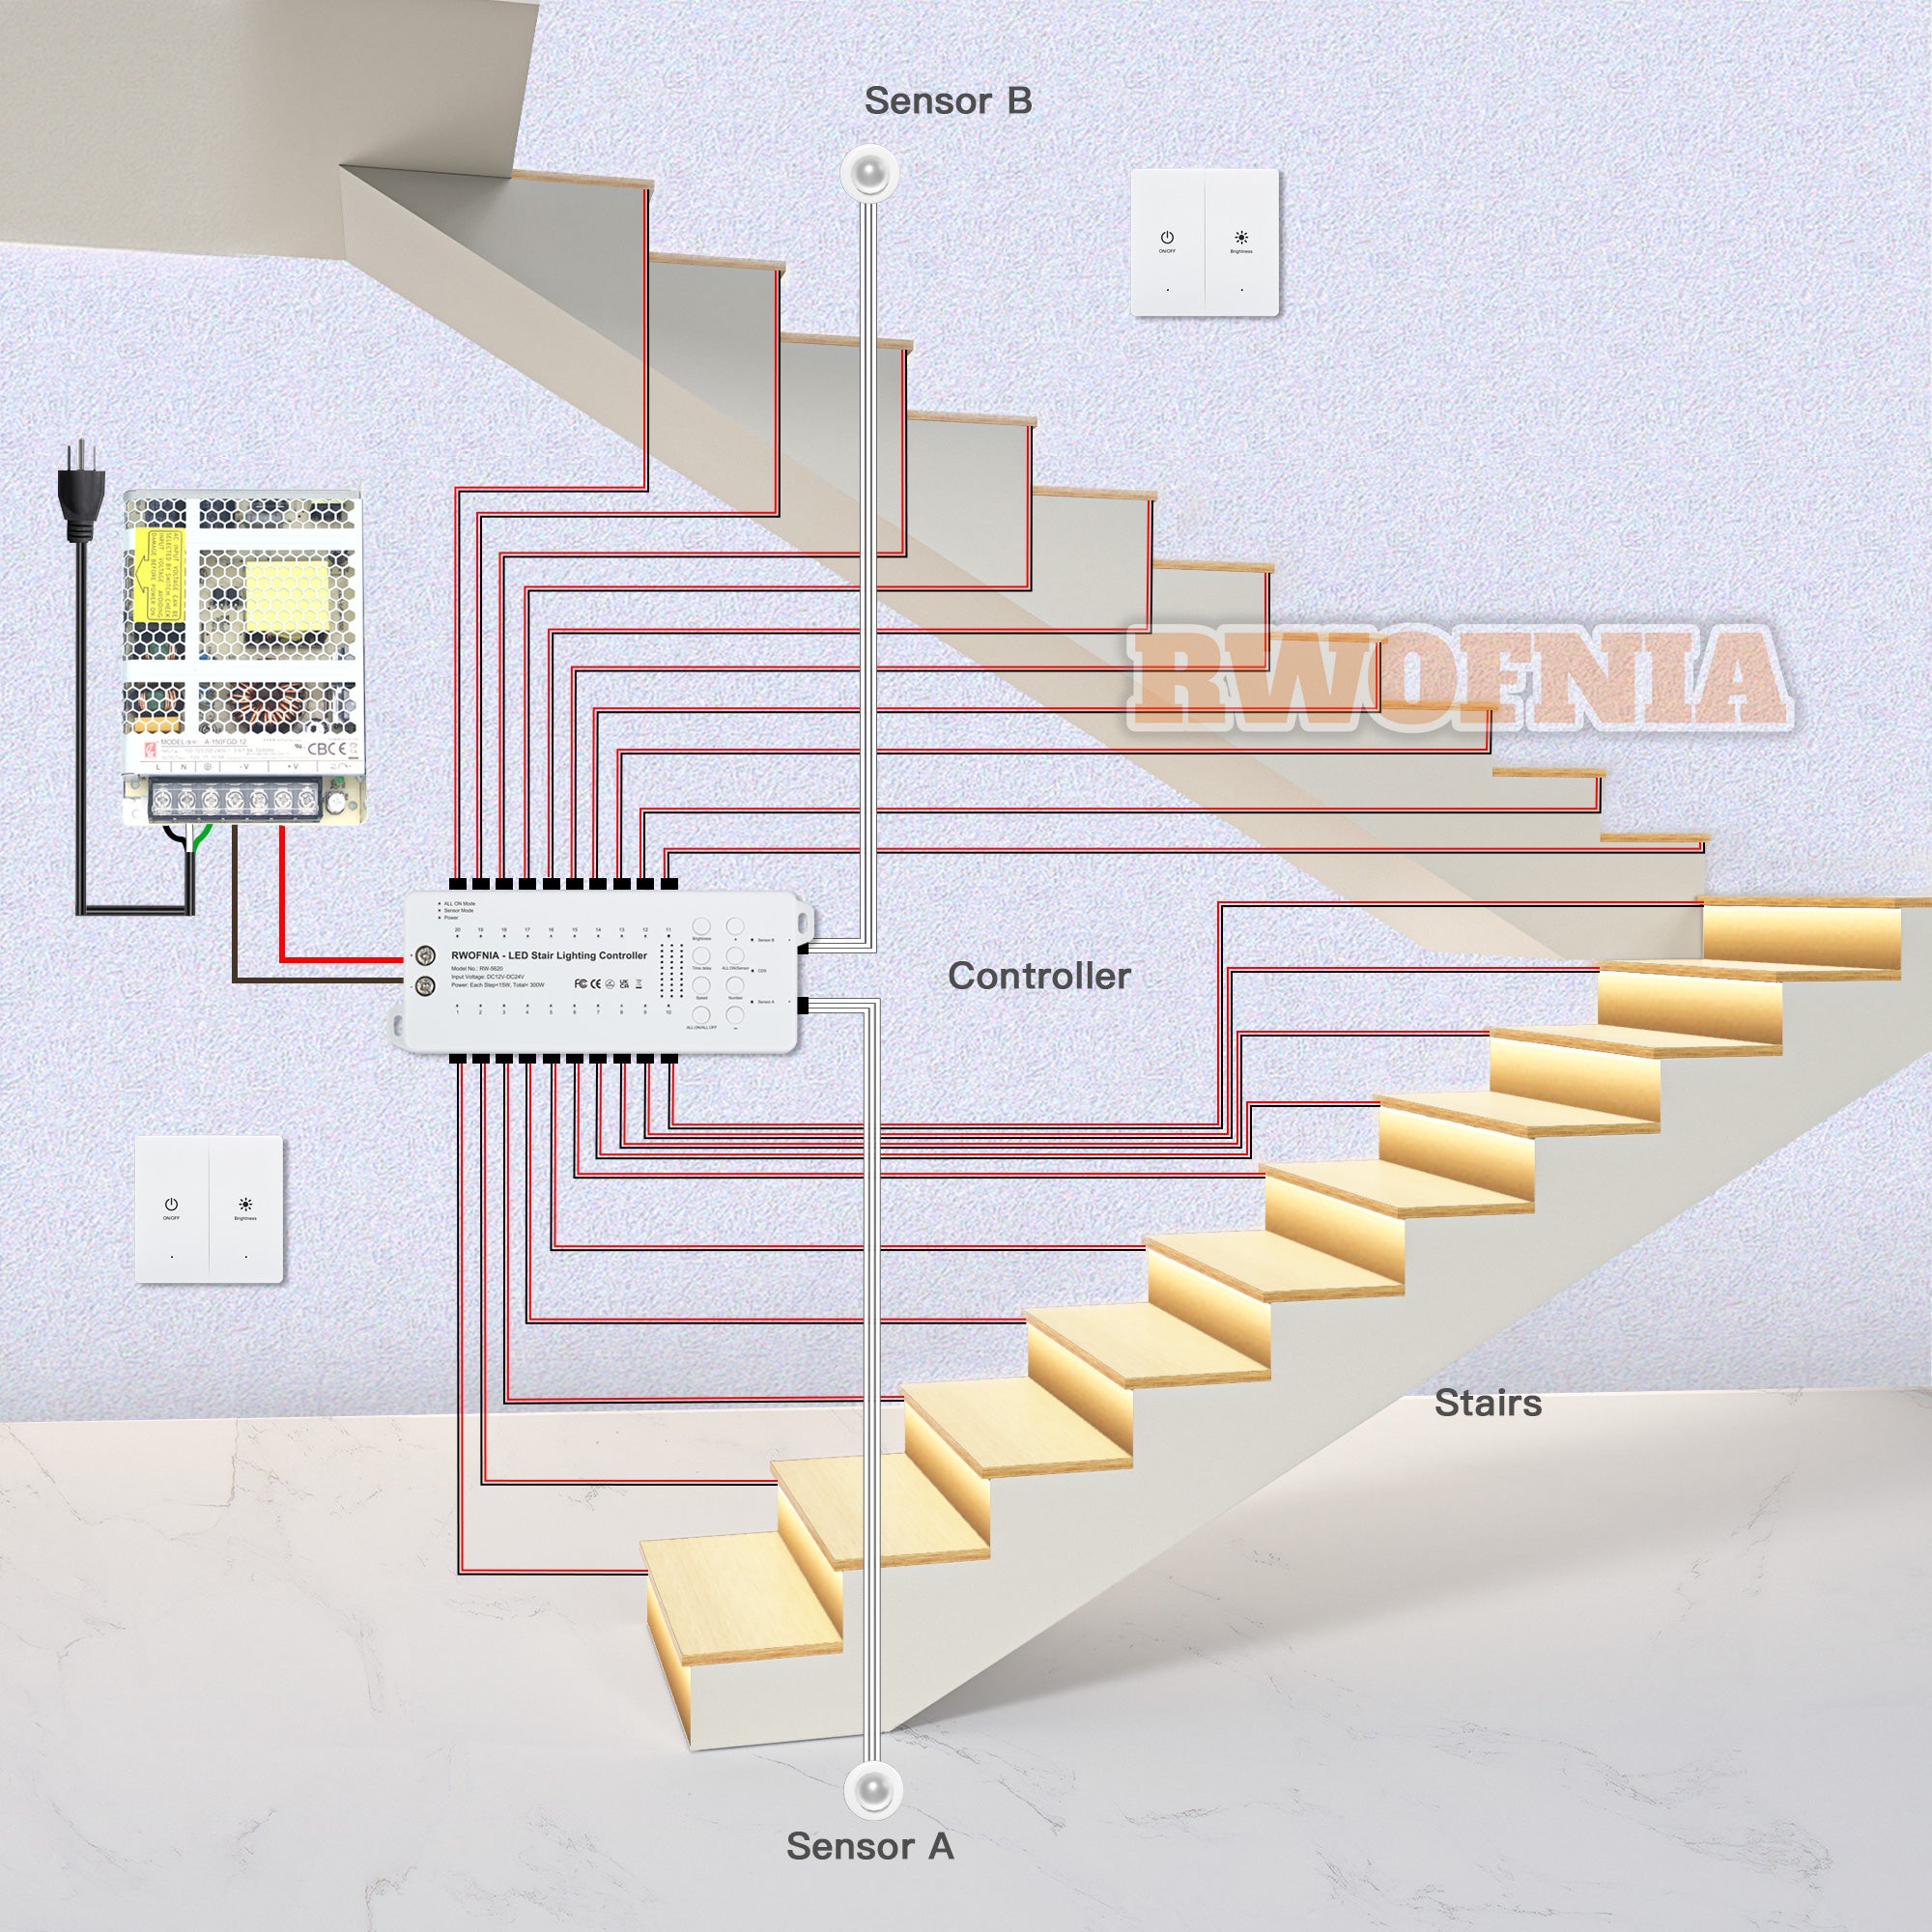 RWOFNIA Intelligent Motion Sensor LED Stair Lighting Kit RW-5620, 40 Inch Long Cuttable LED Light for Indoor LED Step Lights LED Stair Lights